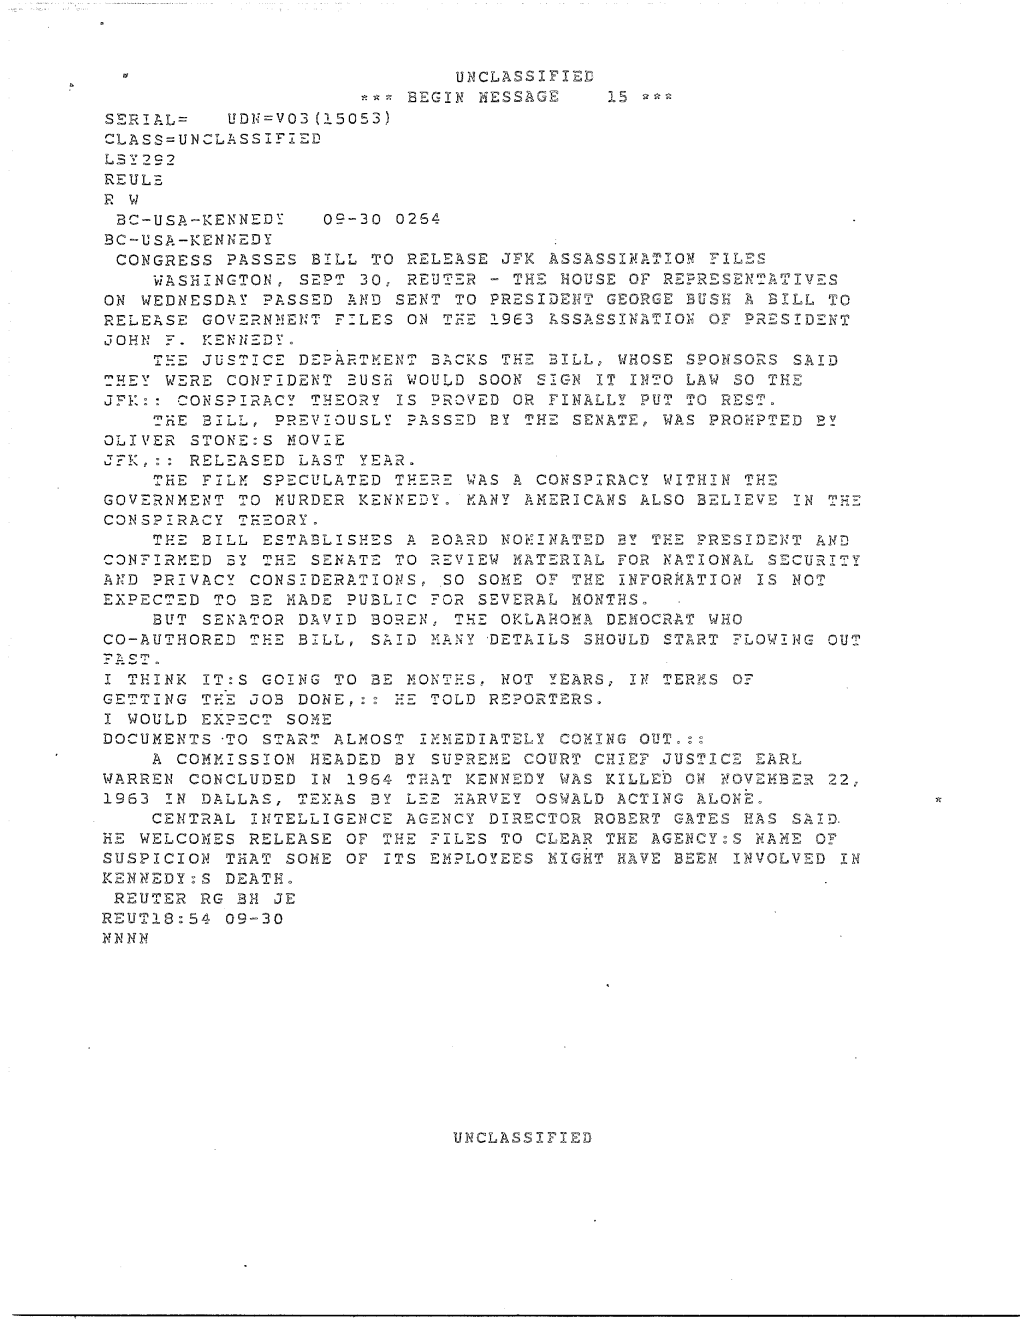 Congress Passes Bill to Release JFK Assassination Files (Reuter Article)